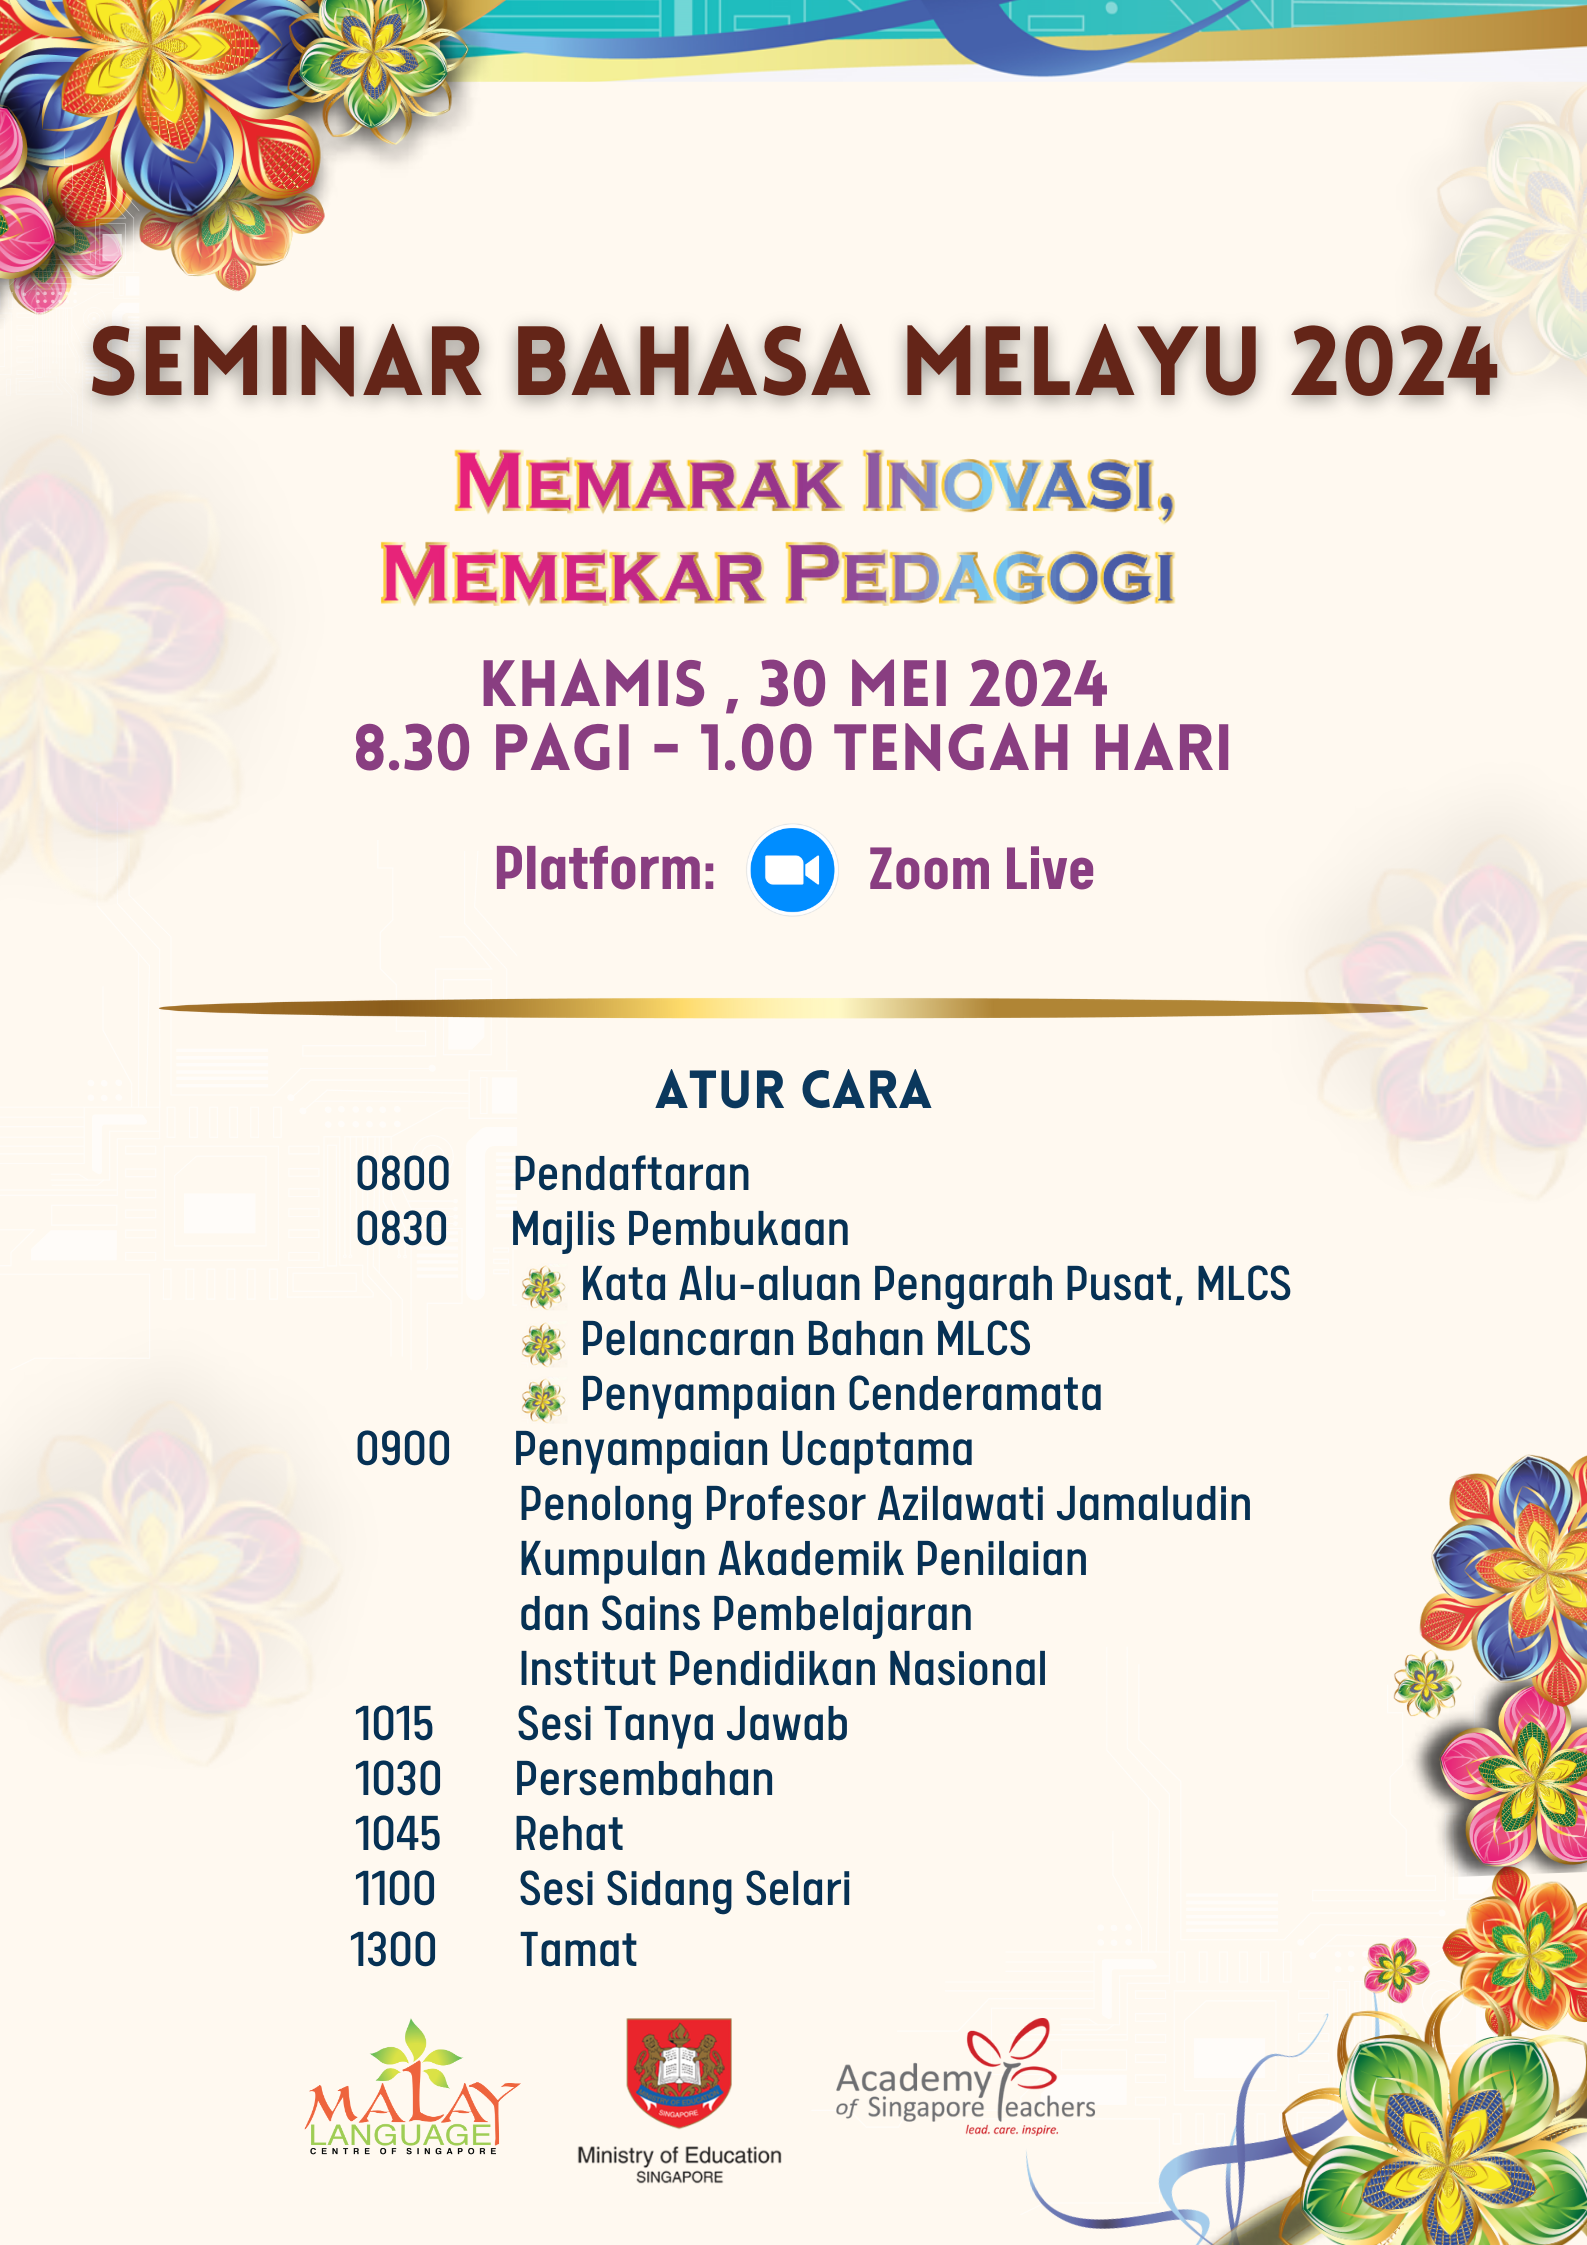 Seminar Bahasa Melayu 2024